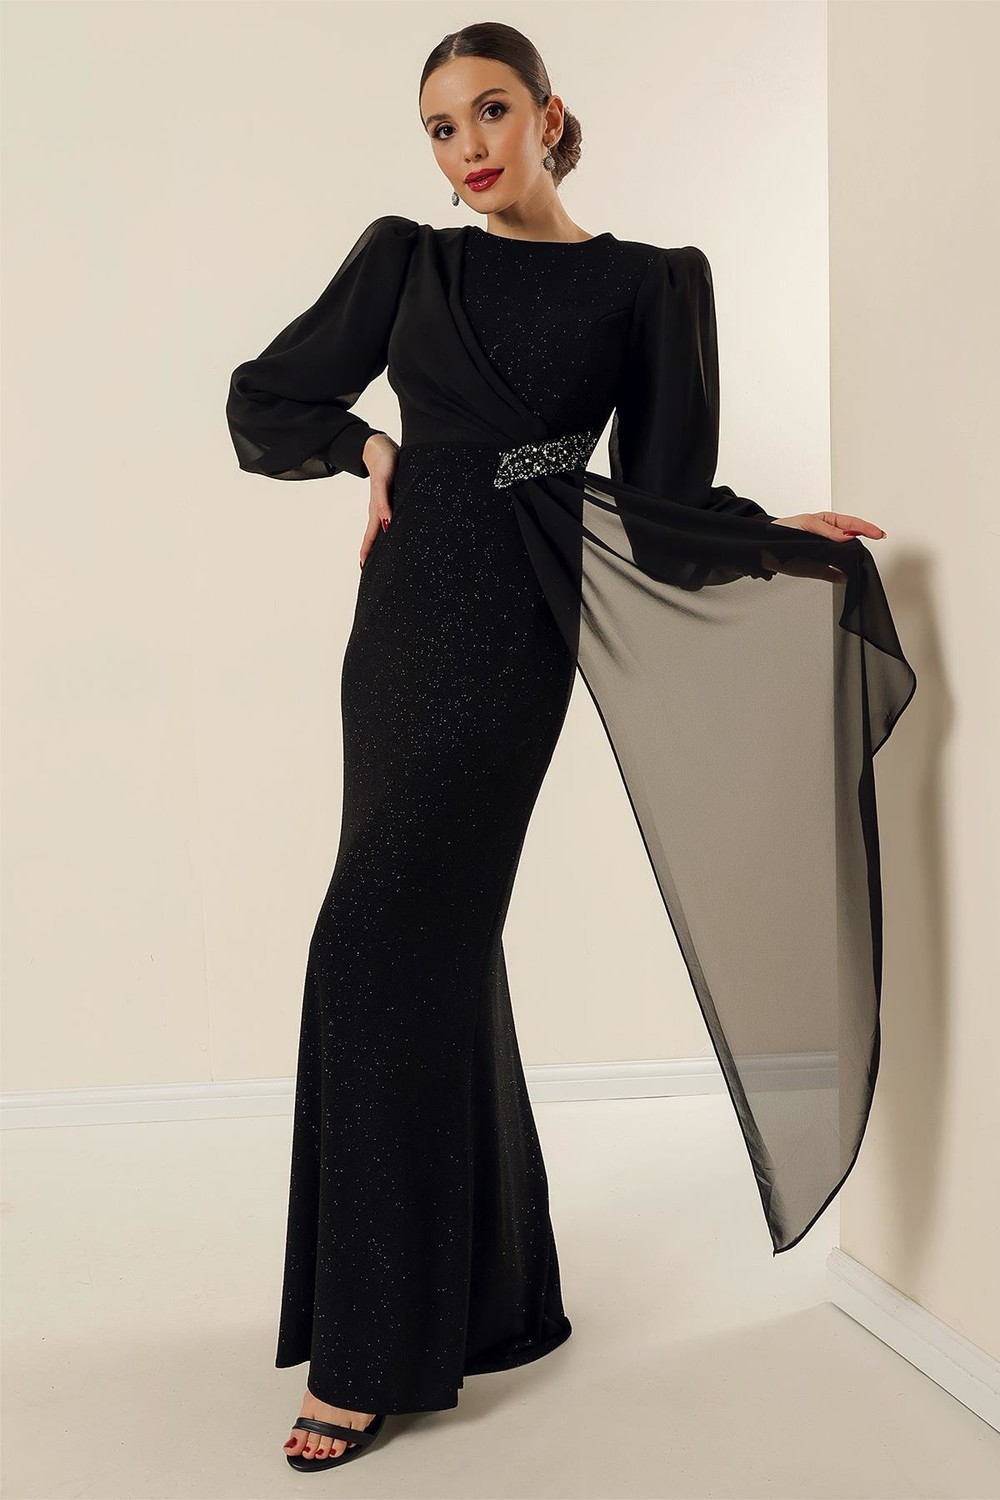 By Saygı Gemstone Accessory Lycra Chiffon Detail Lined Long, Glittery Wide Body Evening Dress.